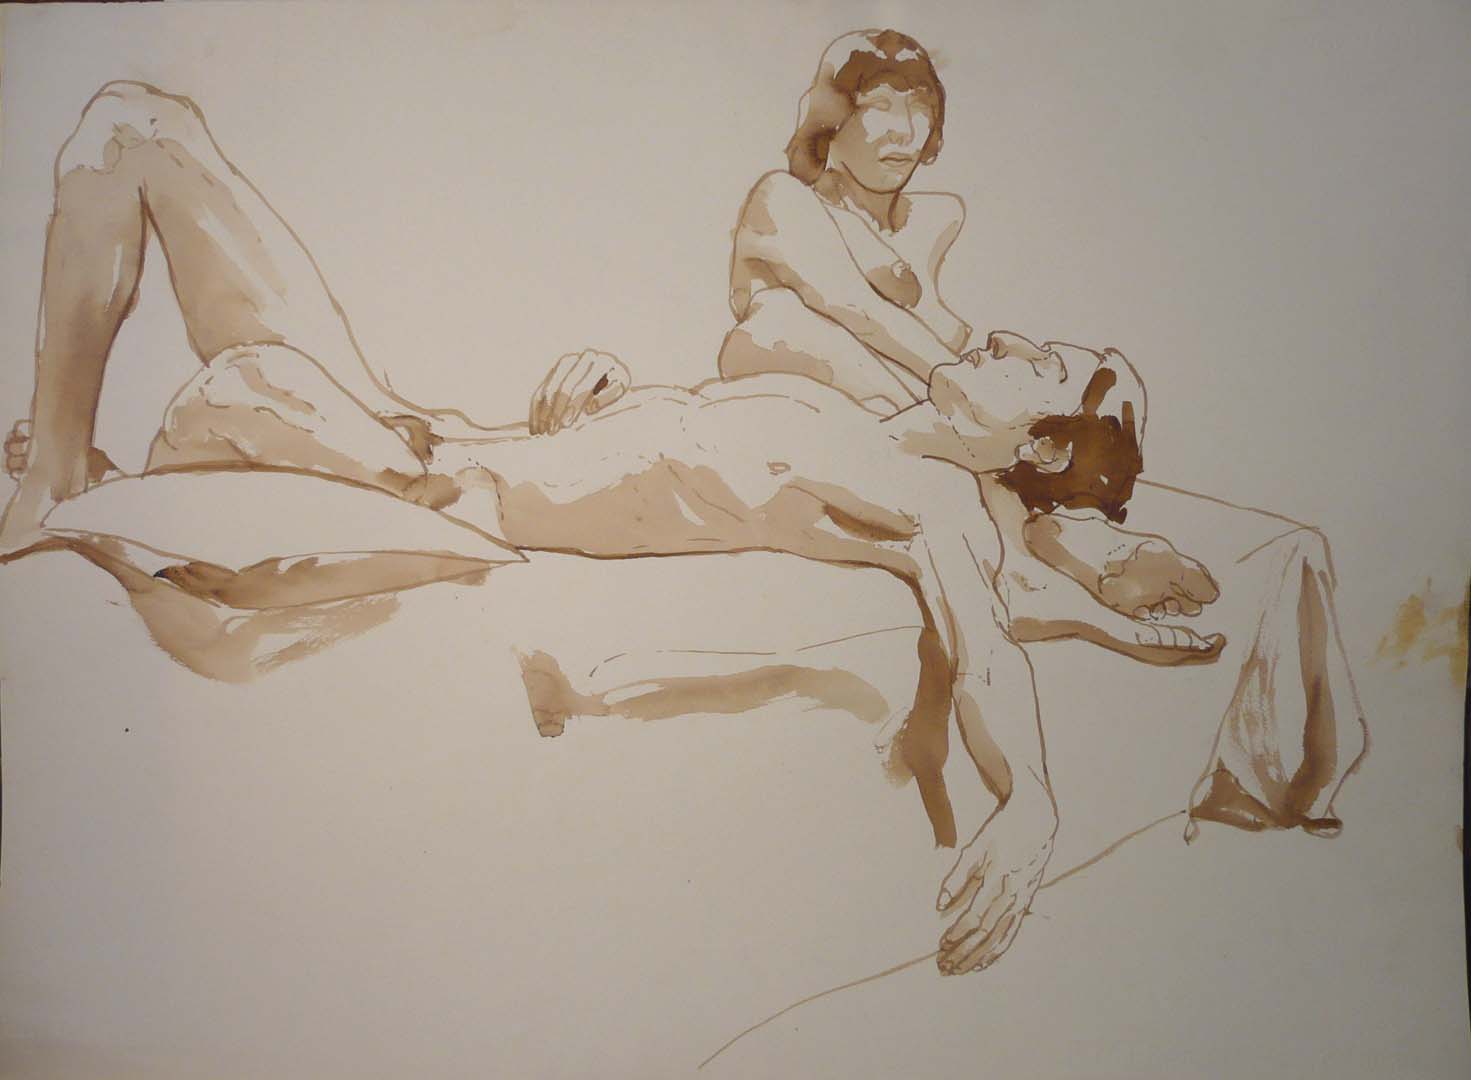 How Feminist Artist Sylvia Sleigh Turned Her Gaze On The Male Nude